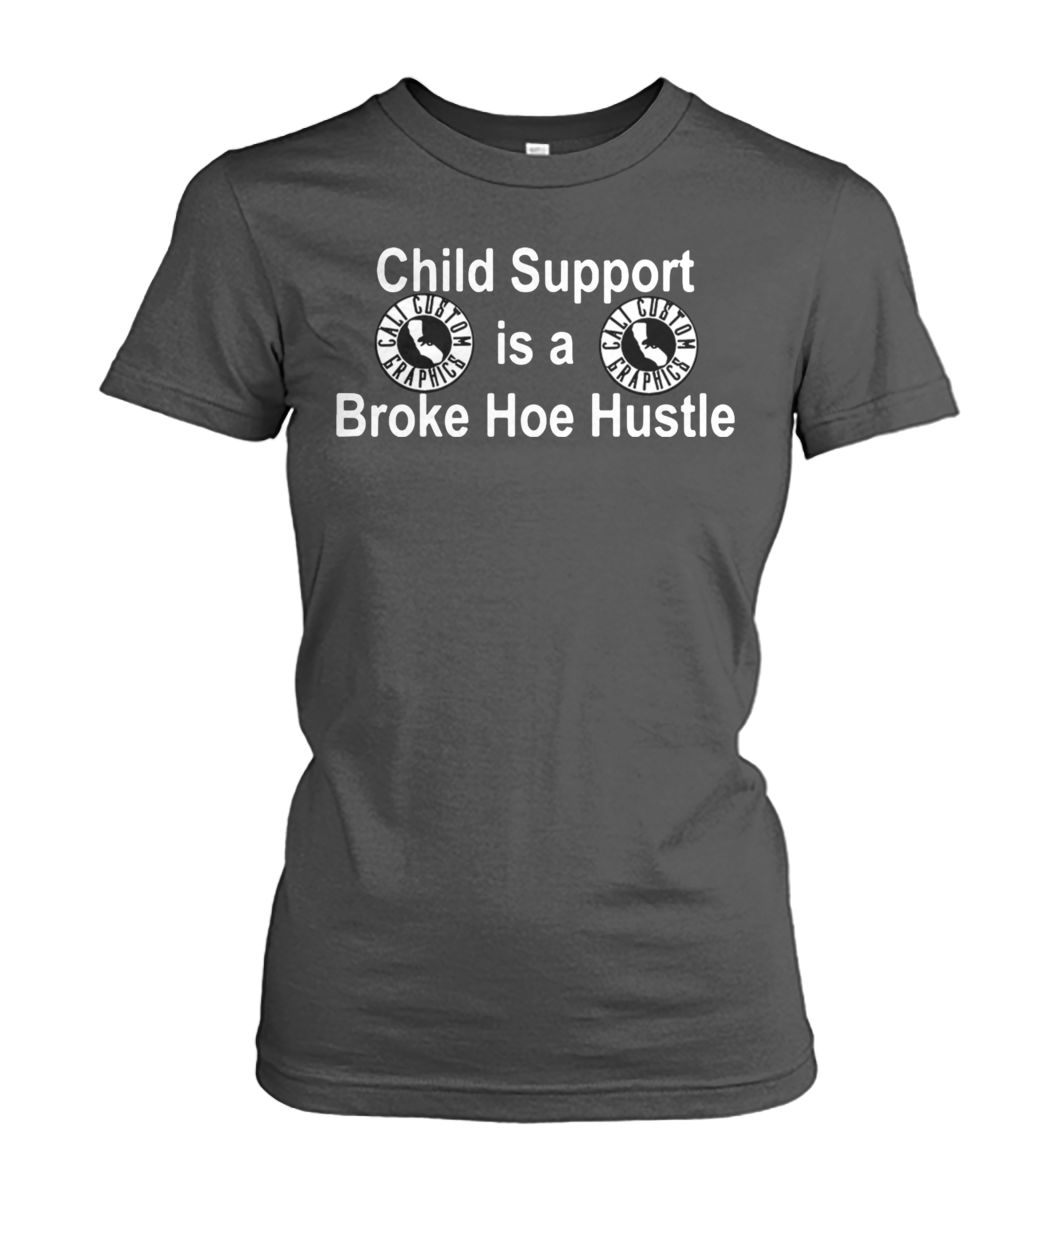 Cali custom graphics child support is a broke hoe hustle women's crew tee